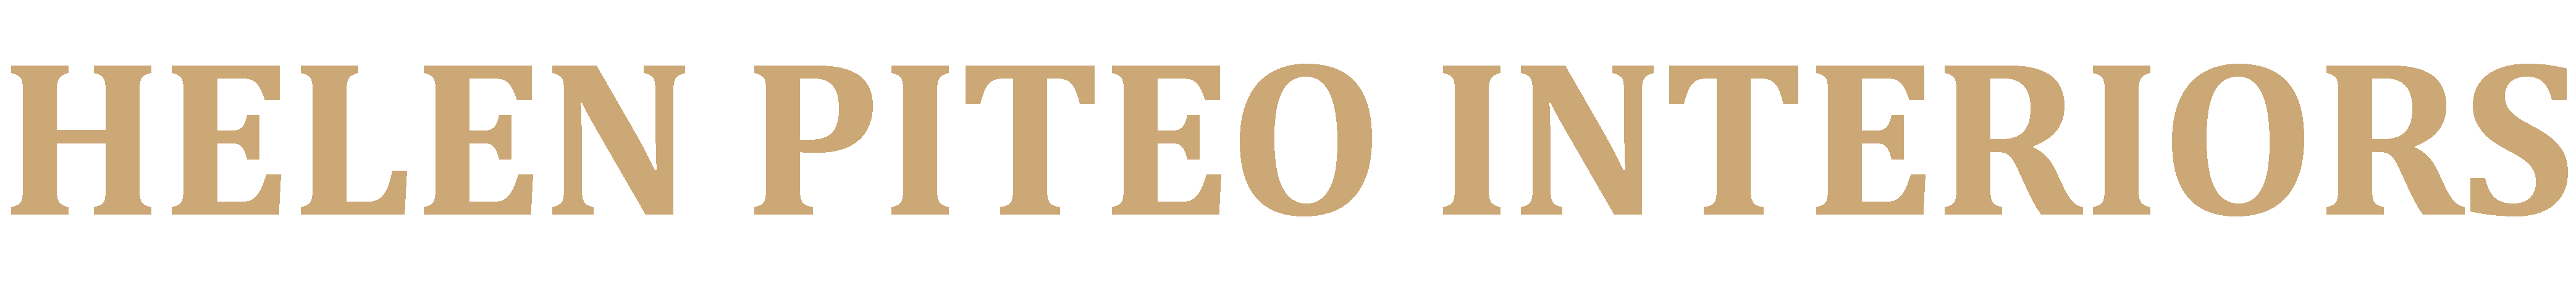 Helen Piteo Interiors Logo